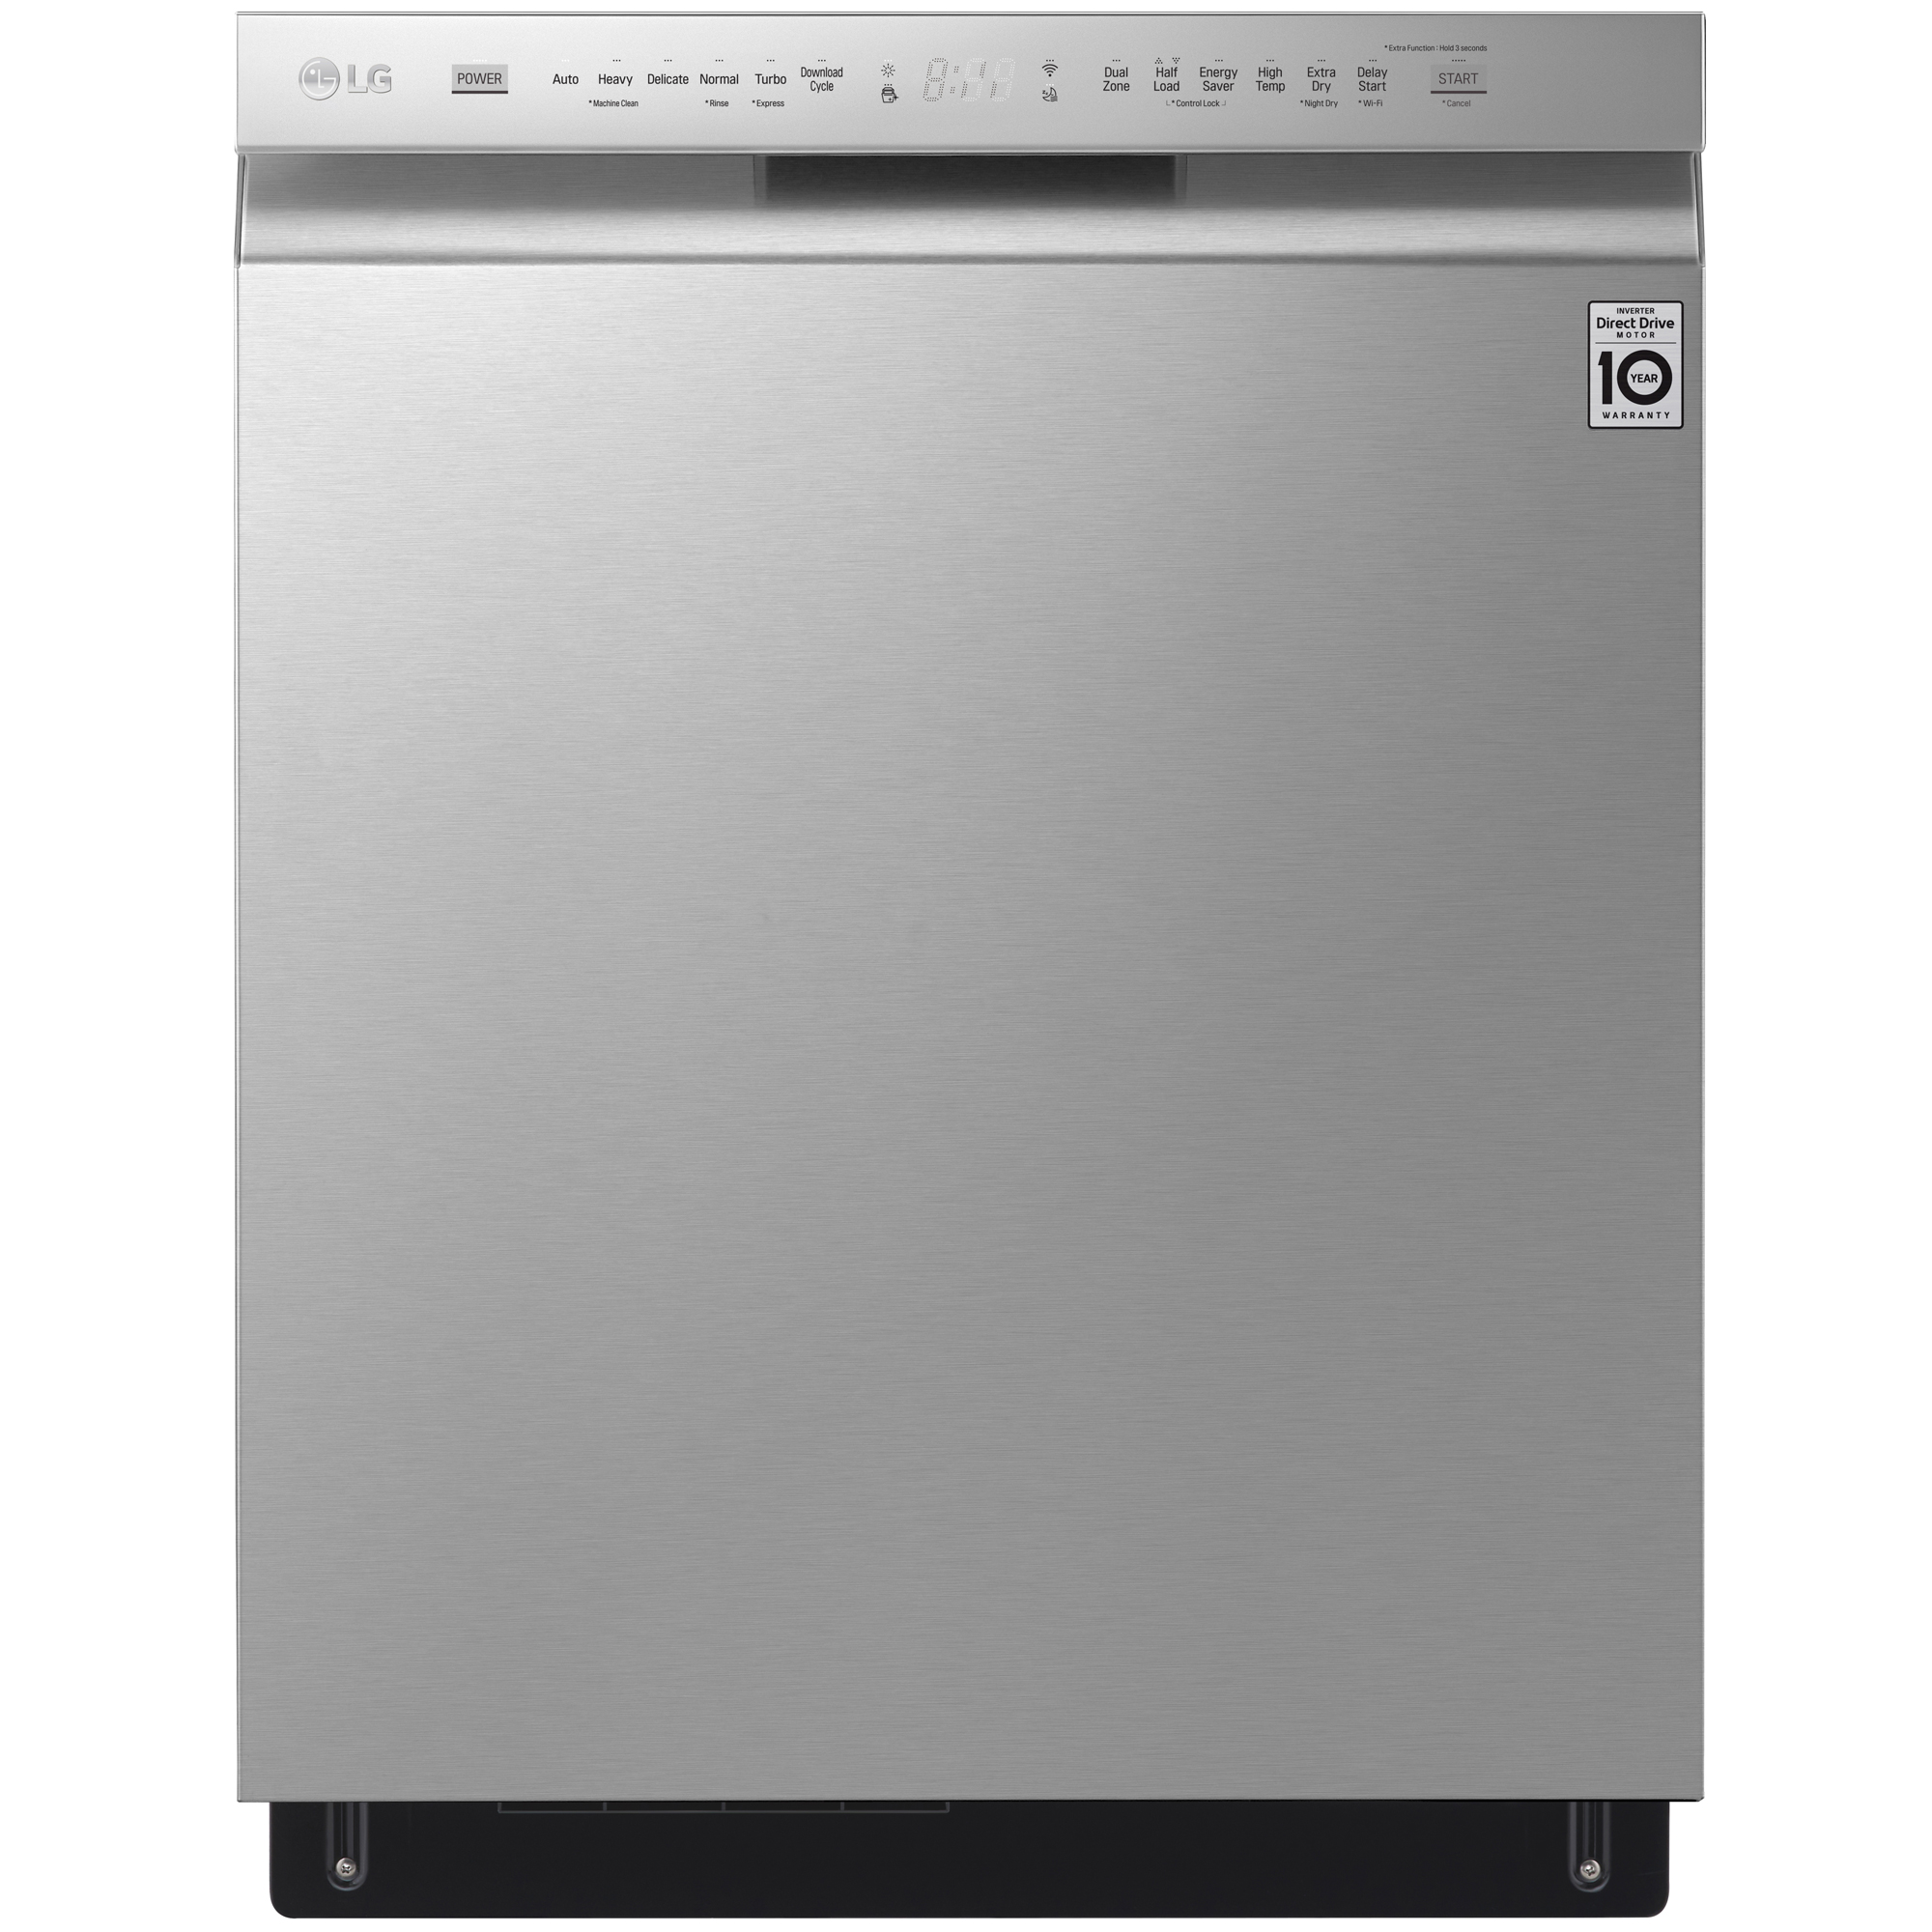 LG Dishwashers - Sears